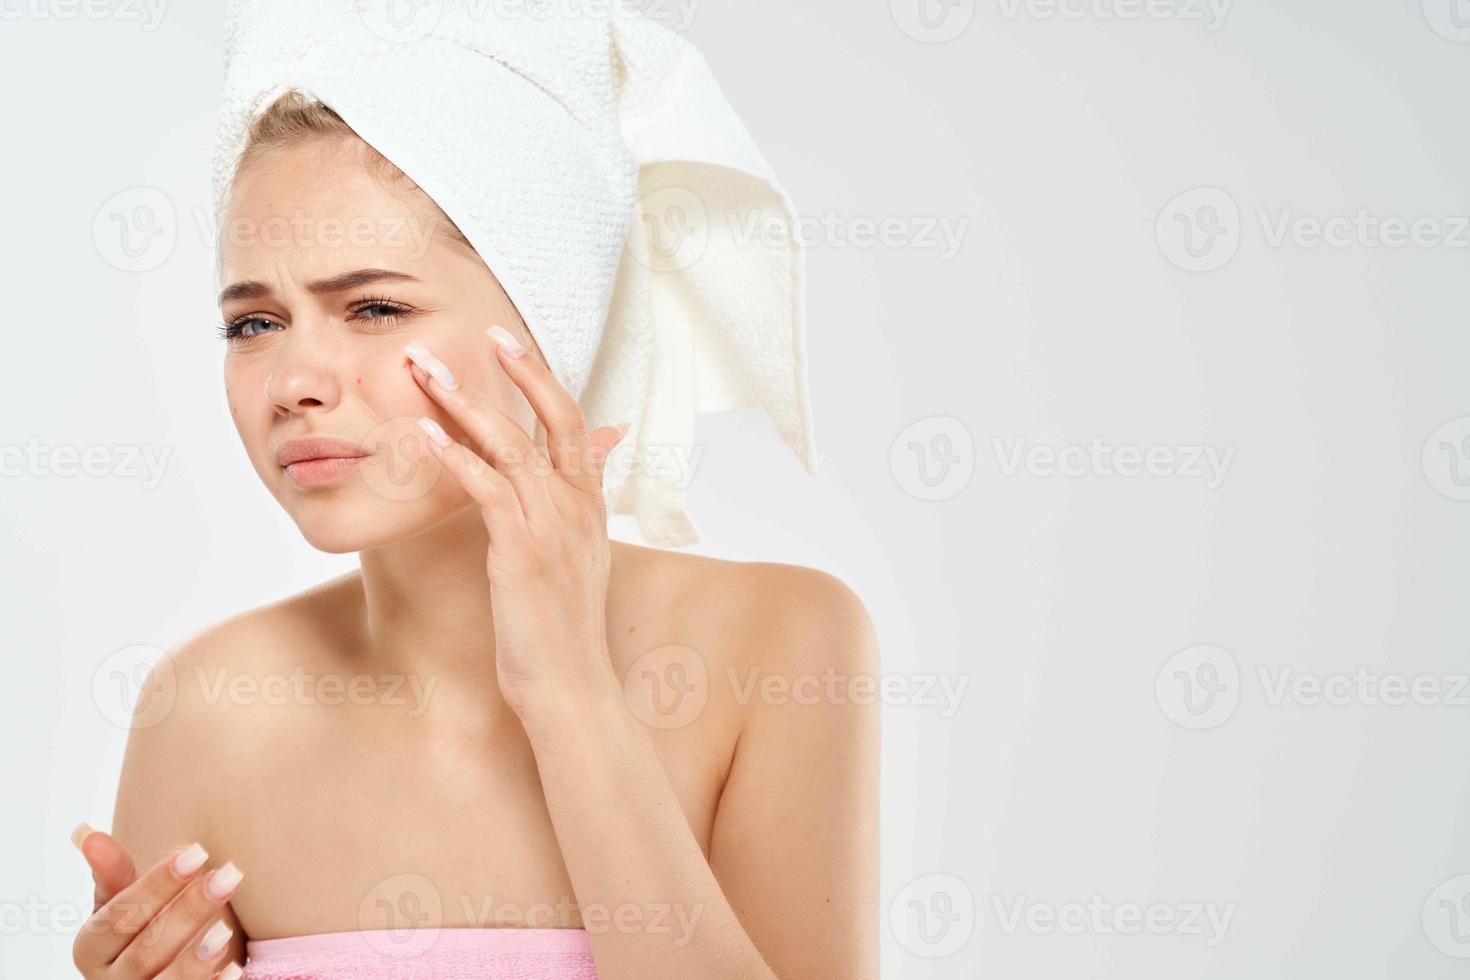 vrouw kaal schouders dermatologie gelaats huid zorg hygiëne foto